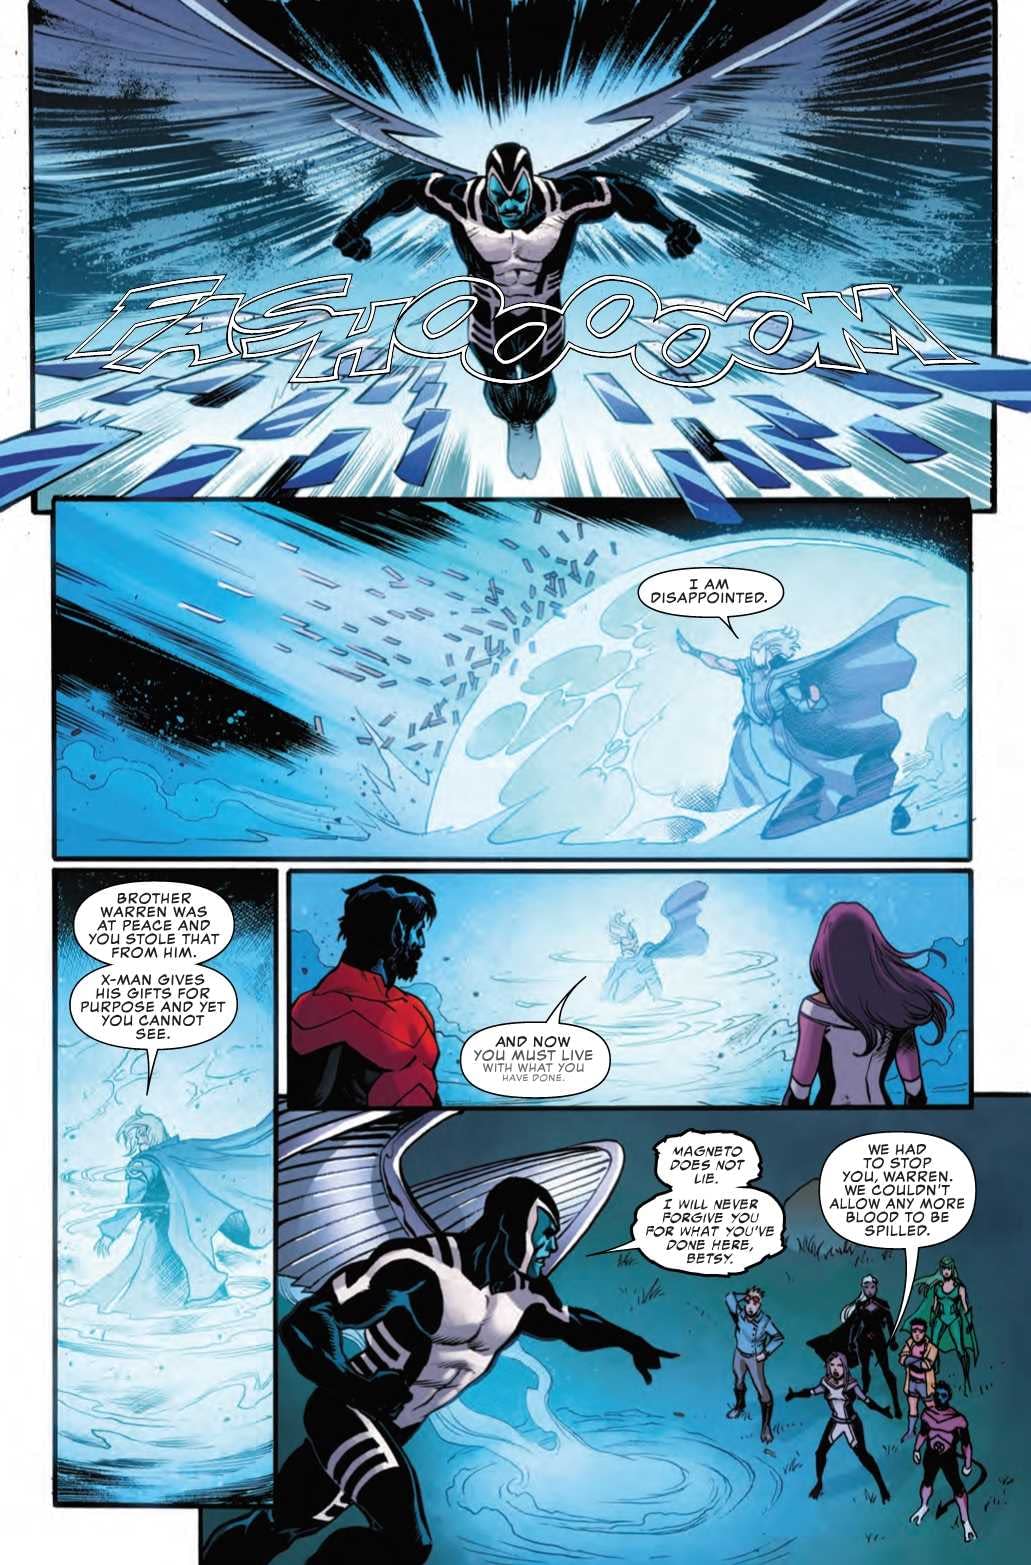 Archangel's Loyalty Tested in Next Week's Uncanny X-Men #6